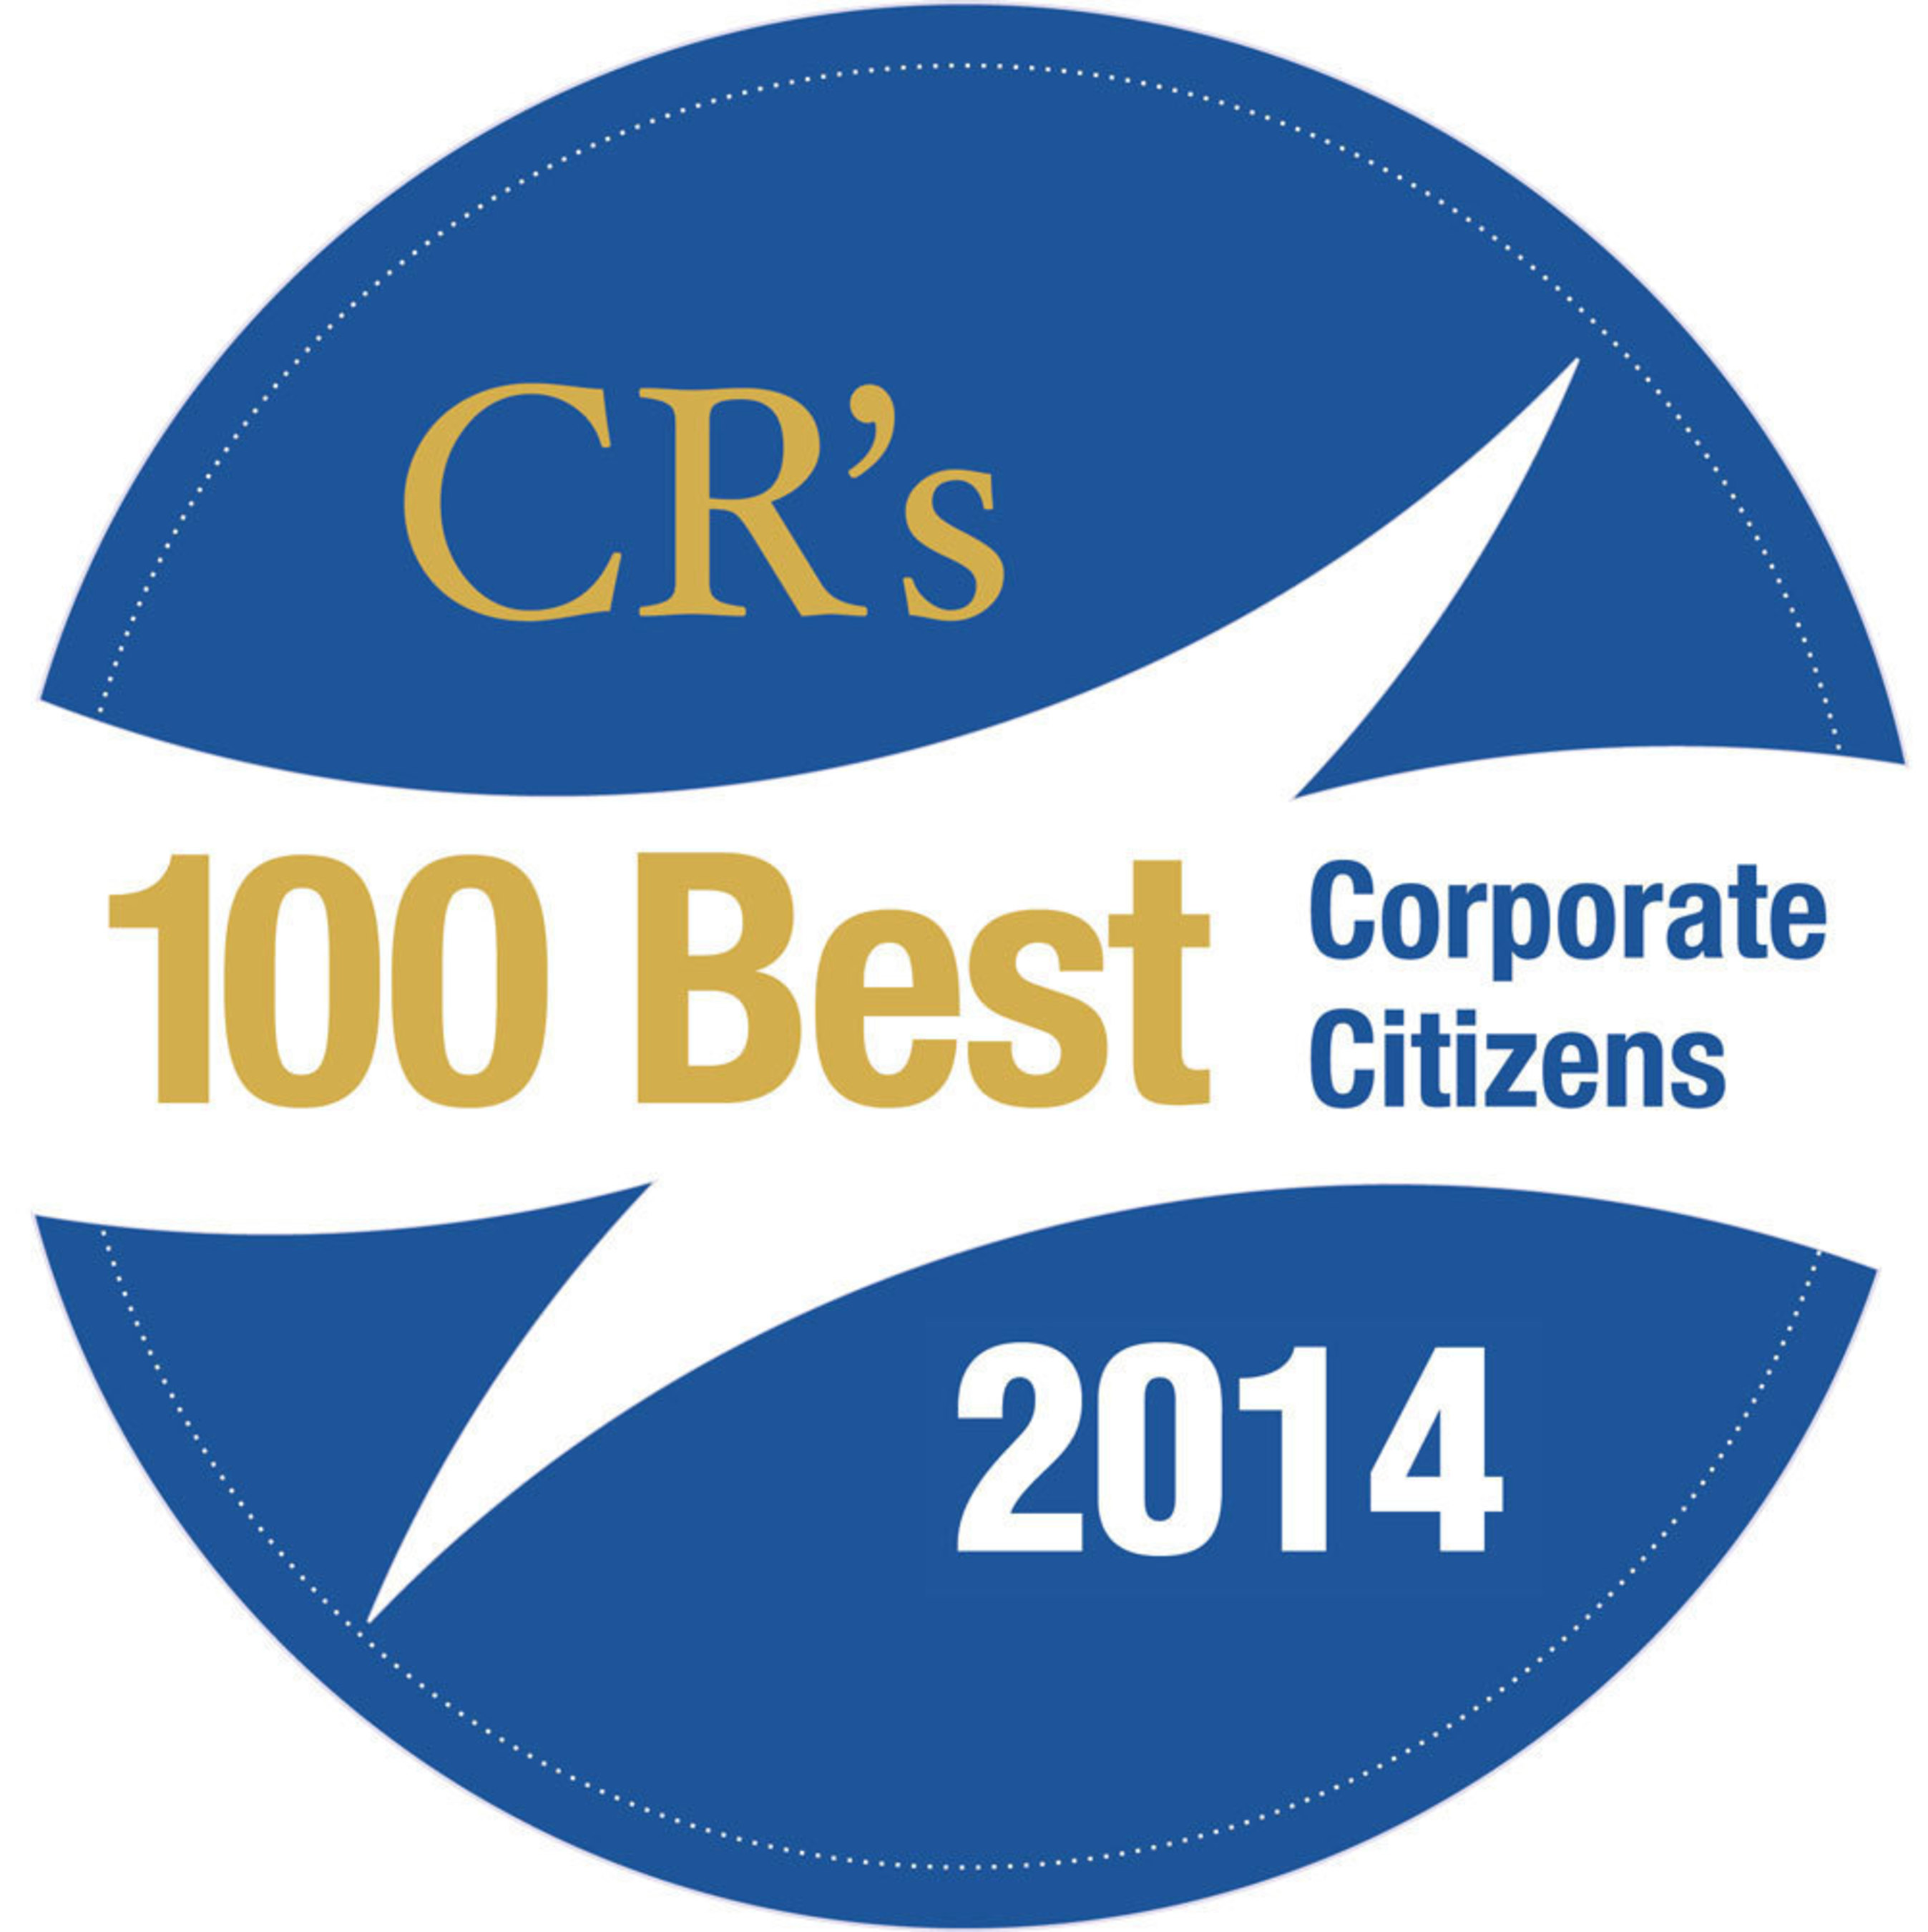 CR Magazine 100 Best Corporate Citizens 2014 logo. (PRNewsFoto/Raytheon Company)